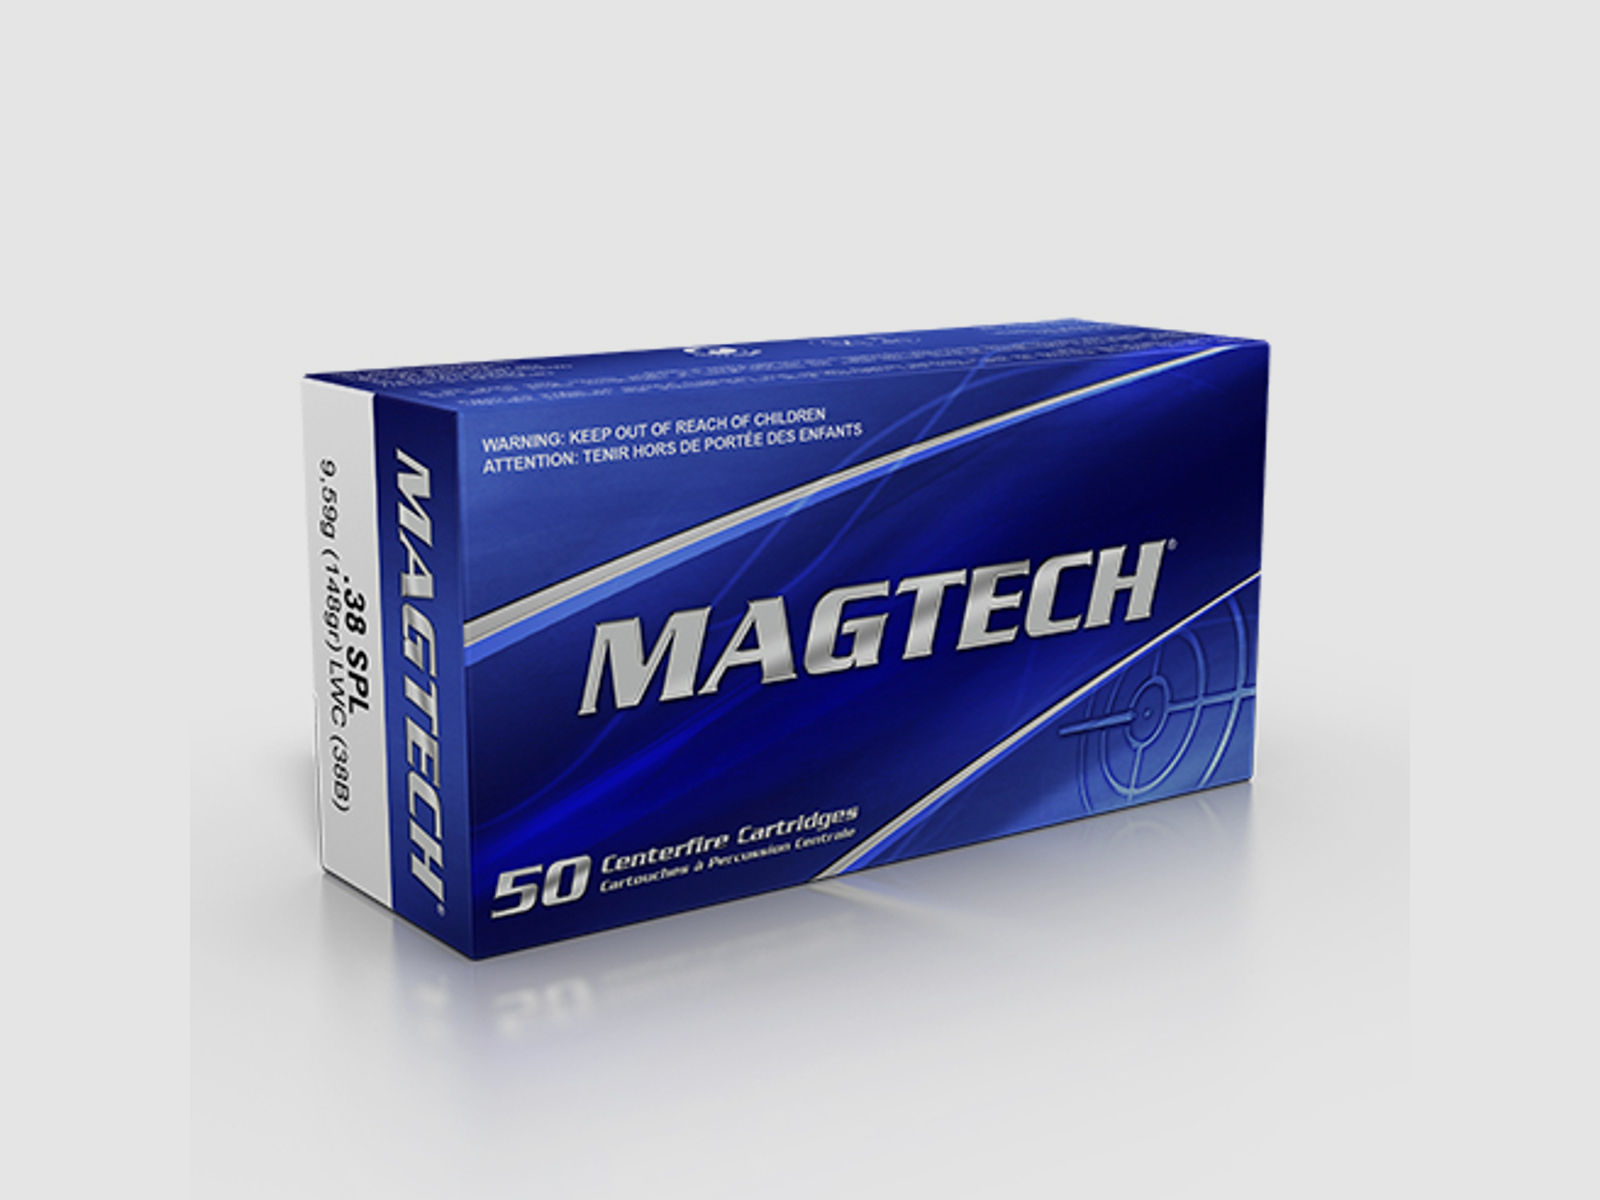 Magtech .38 Special 148GR LWC 50 Patronen